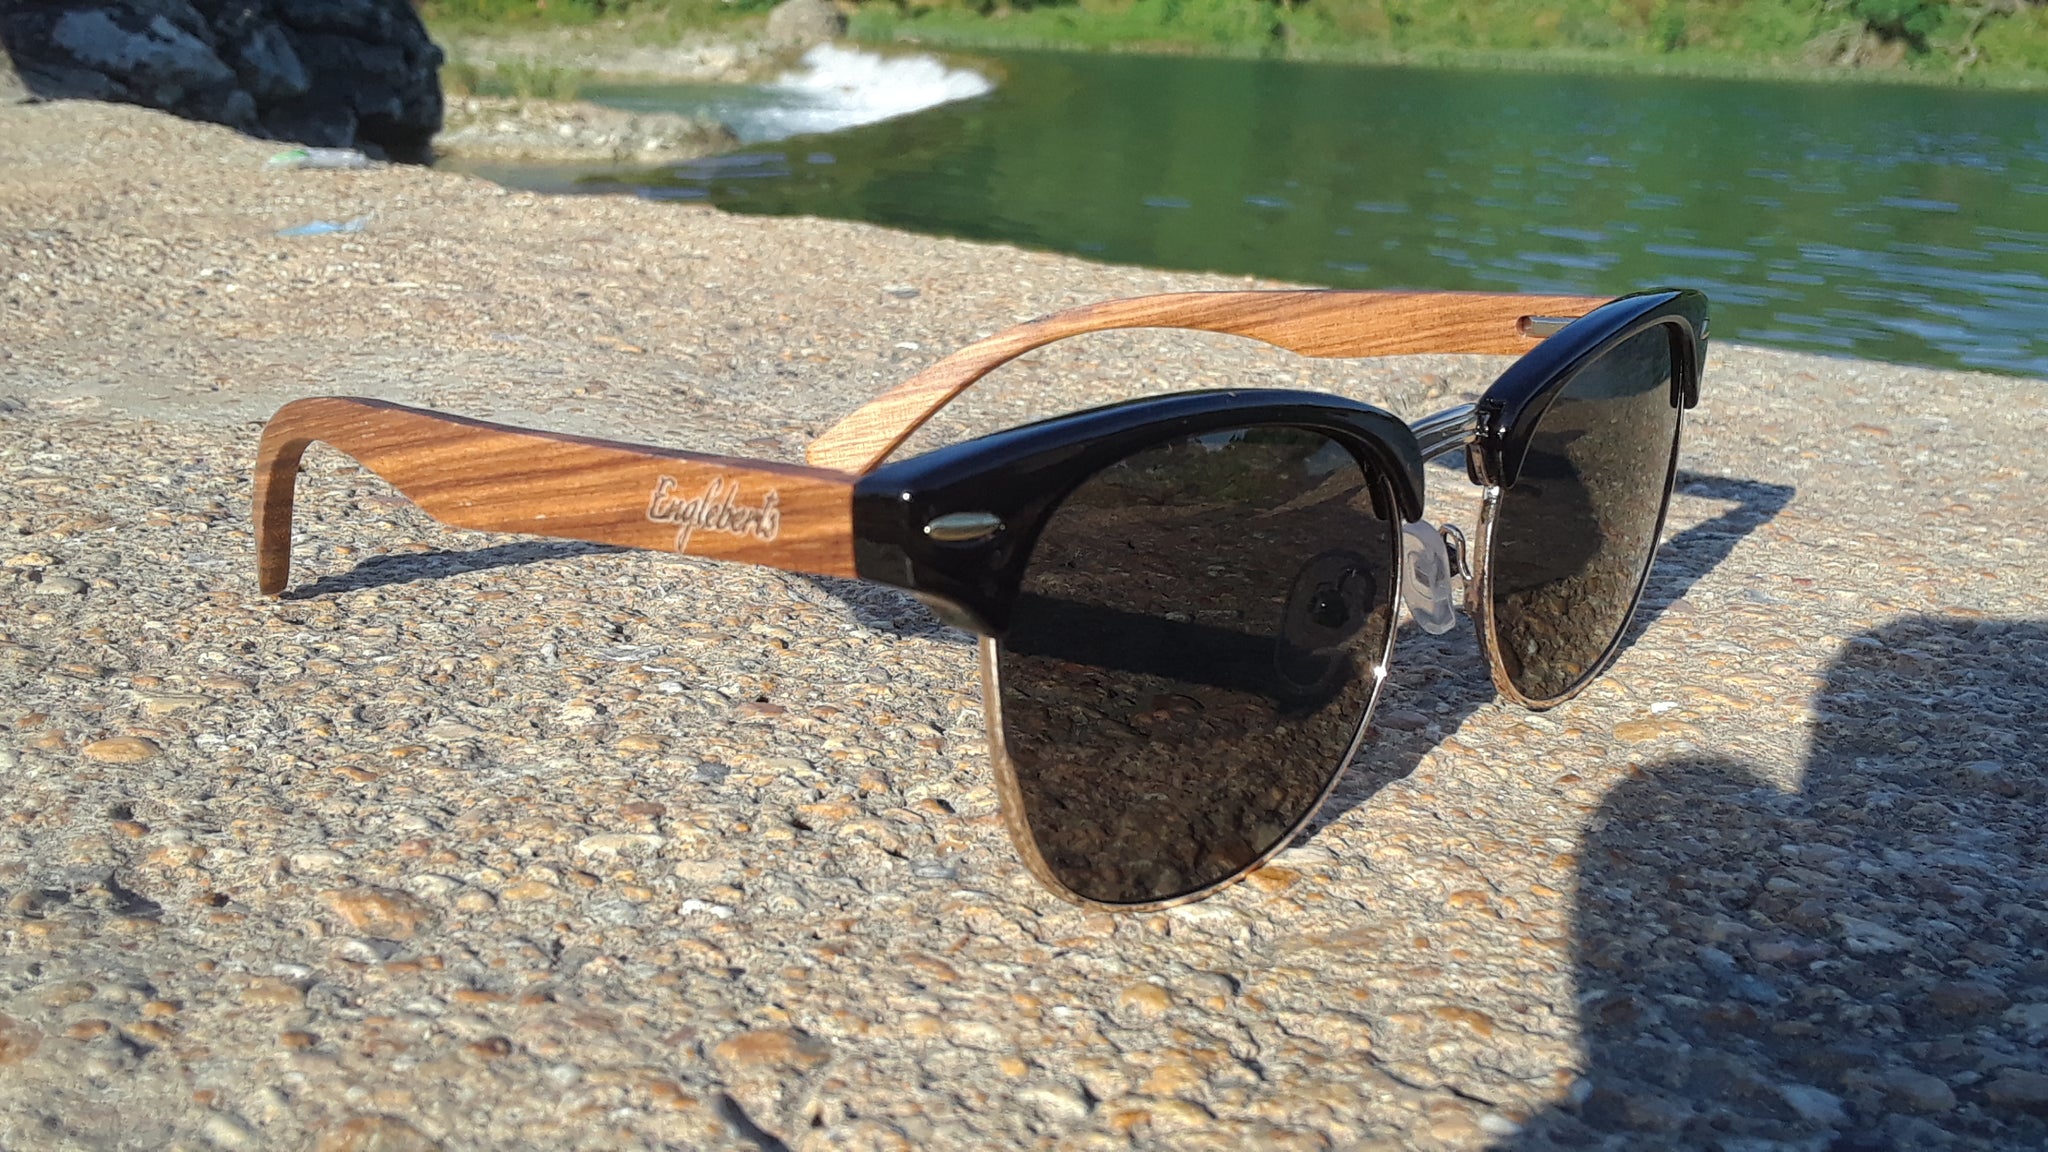 Buy DZUKOU Fibonacci Sunglasses for Men - TAC Polarized -100% UV Protection  - Bamboo Wooden Frame - Gradient Grey Lens - Natural Wood Sunglasses -  Eco-Friendly Alternative - Modern and Stylish -